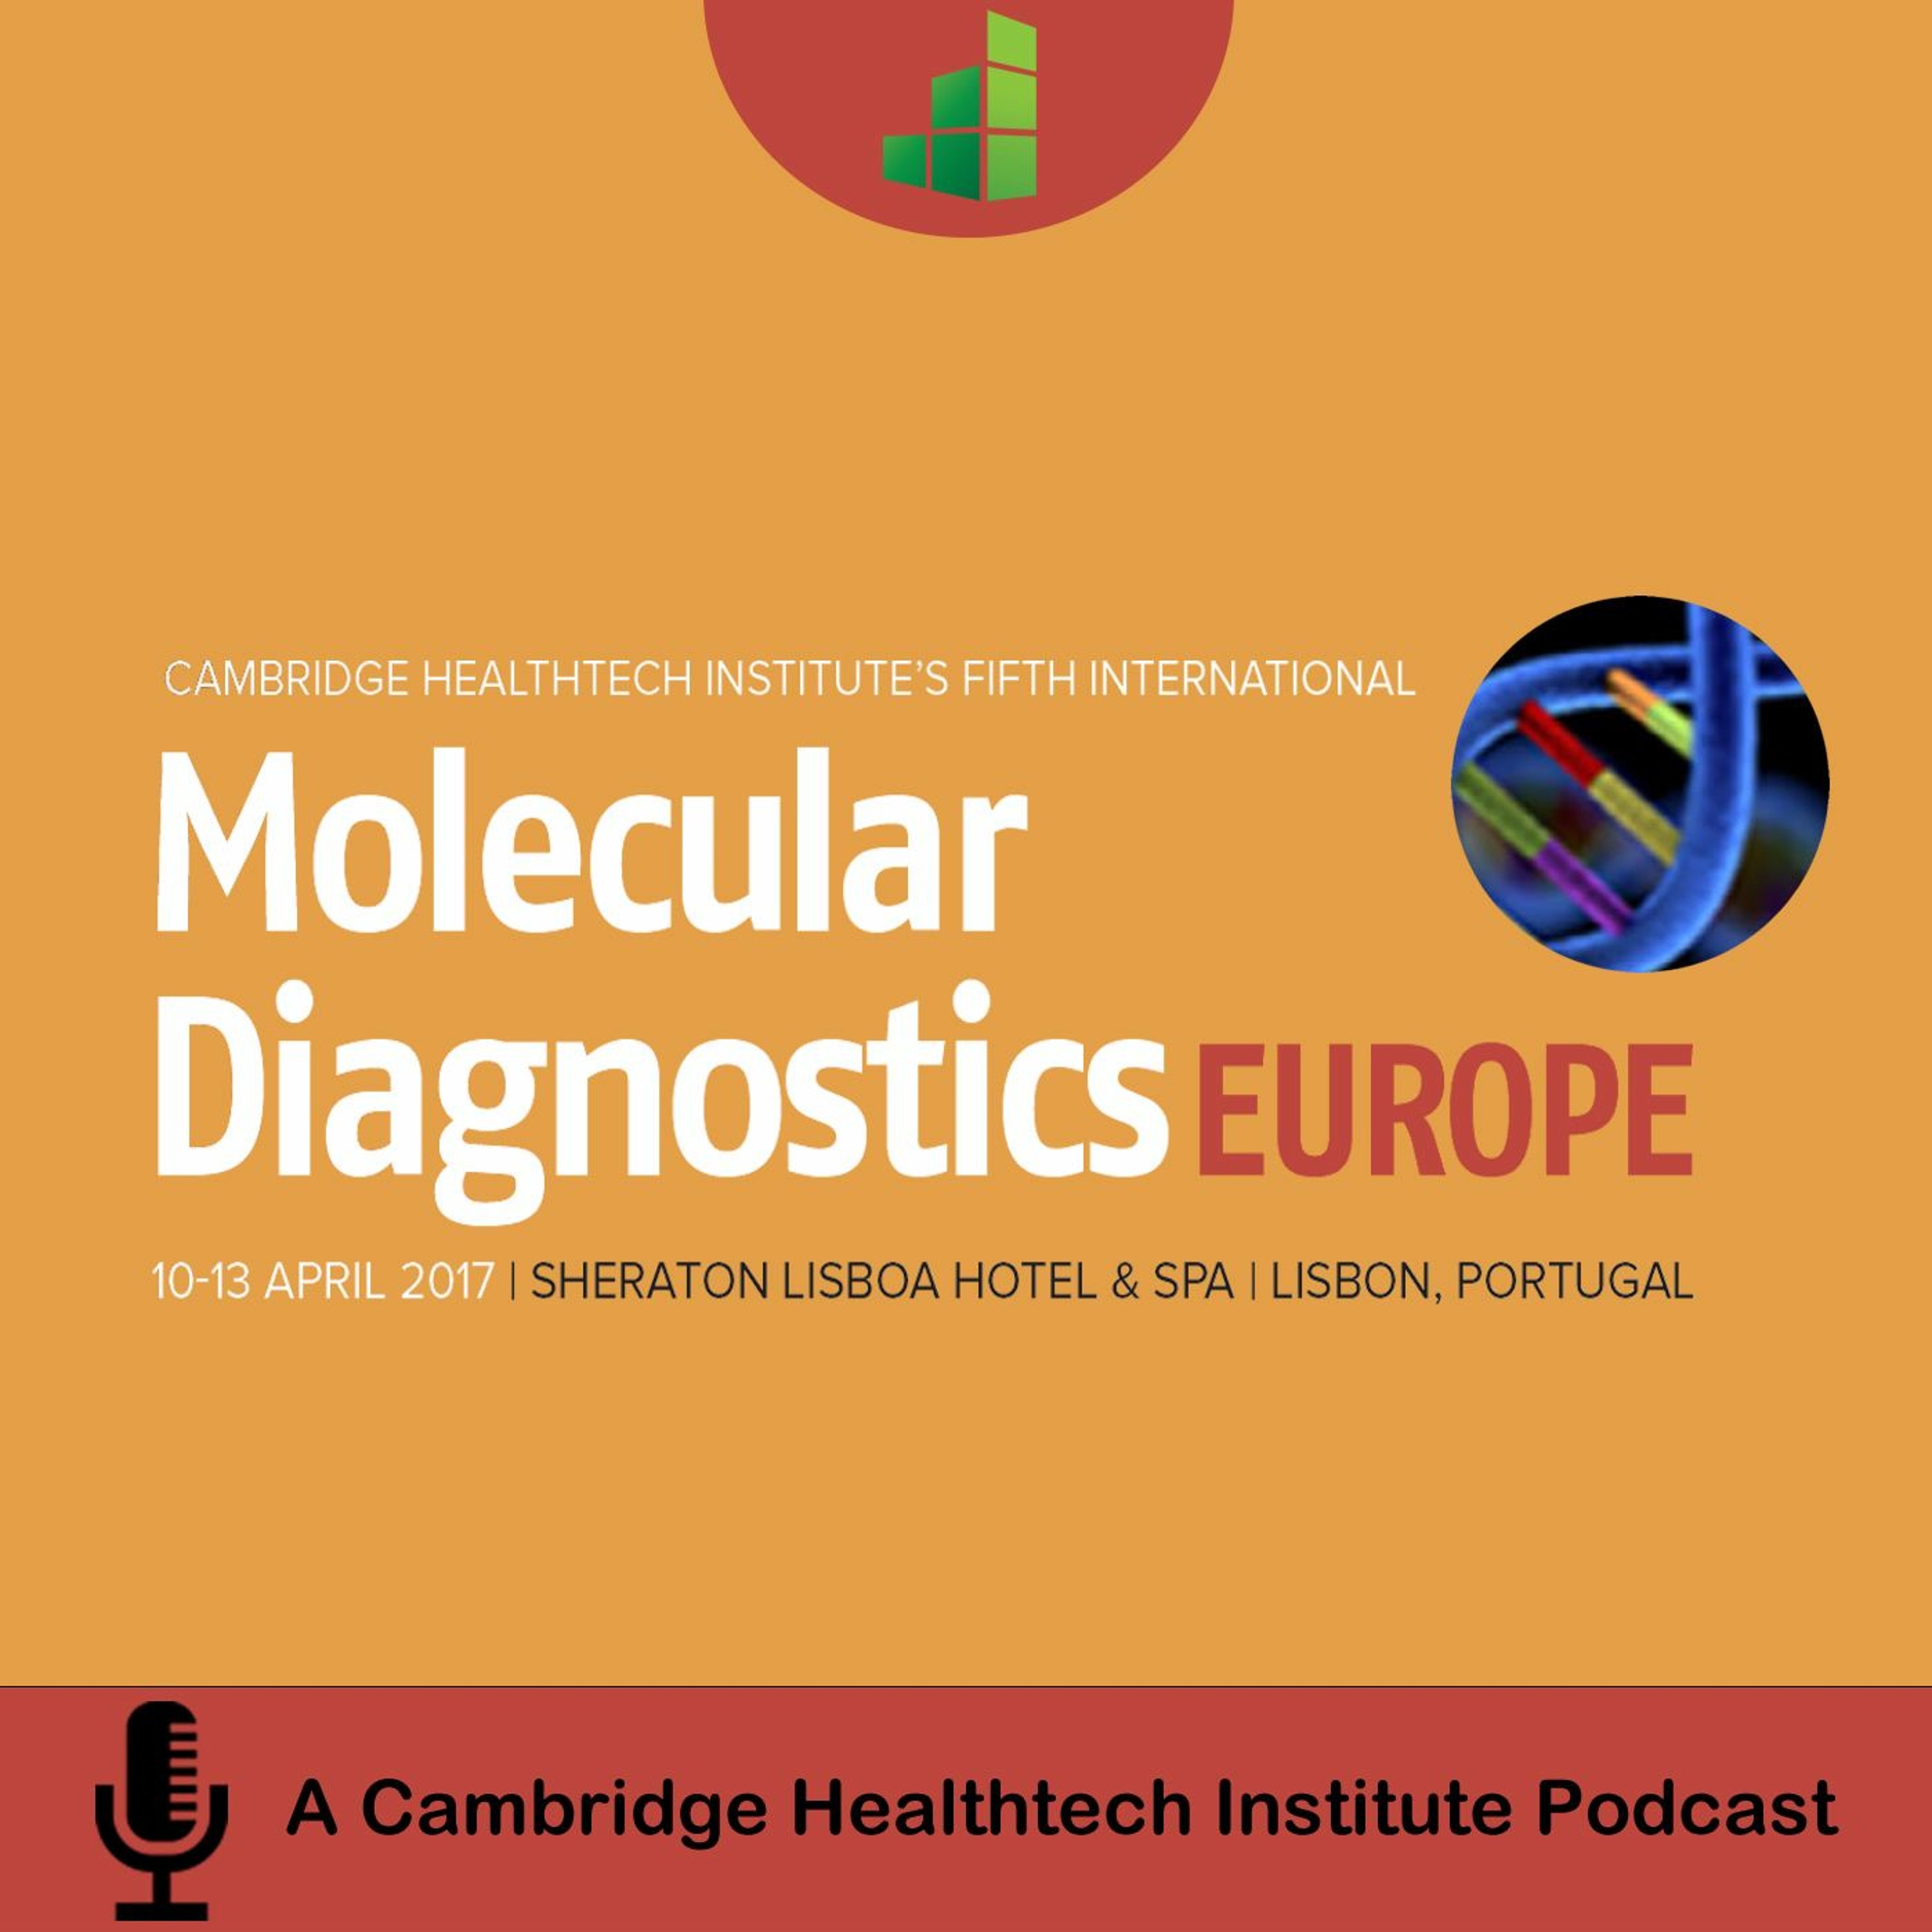 Molecular Diagnostics Europe 2017 | Immune Monitoring in Next Generation Immunotherapy Trials